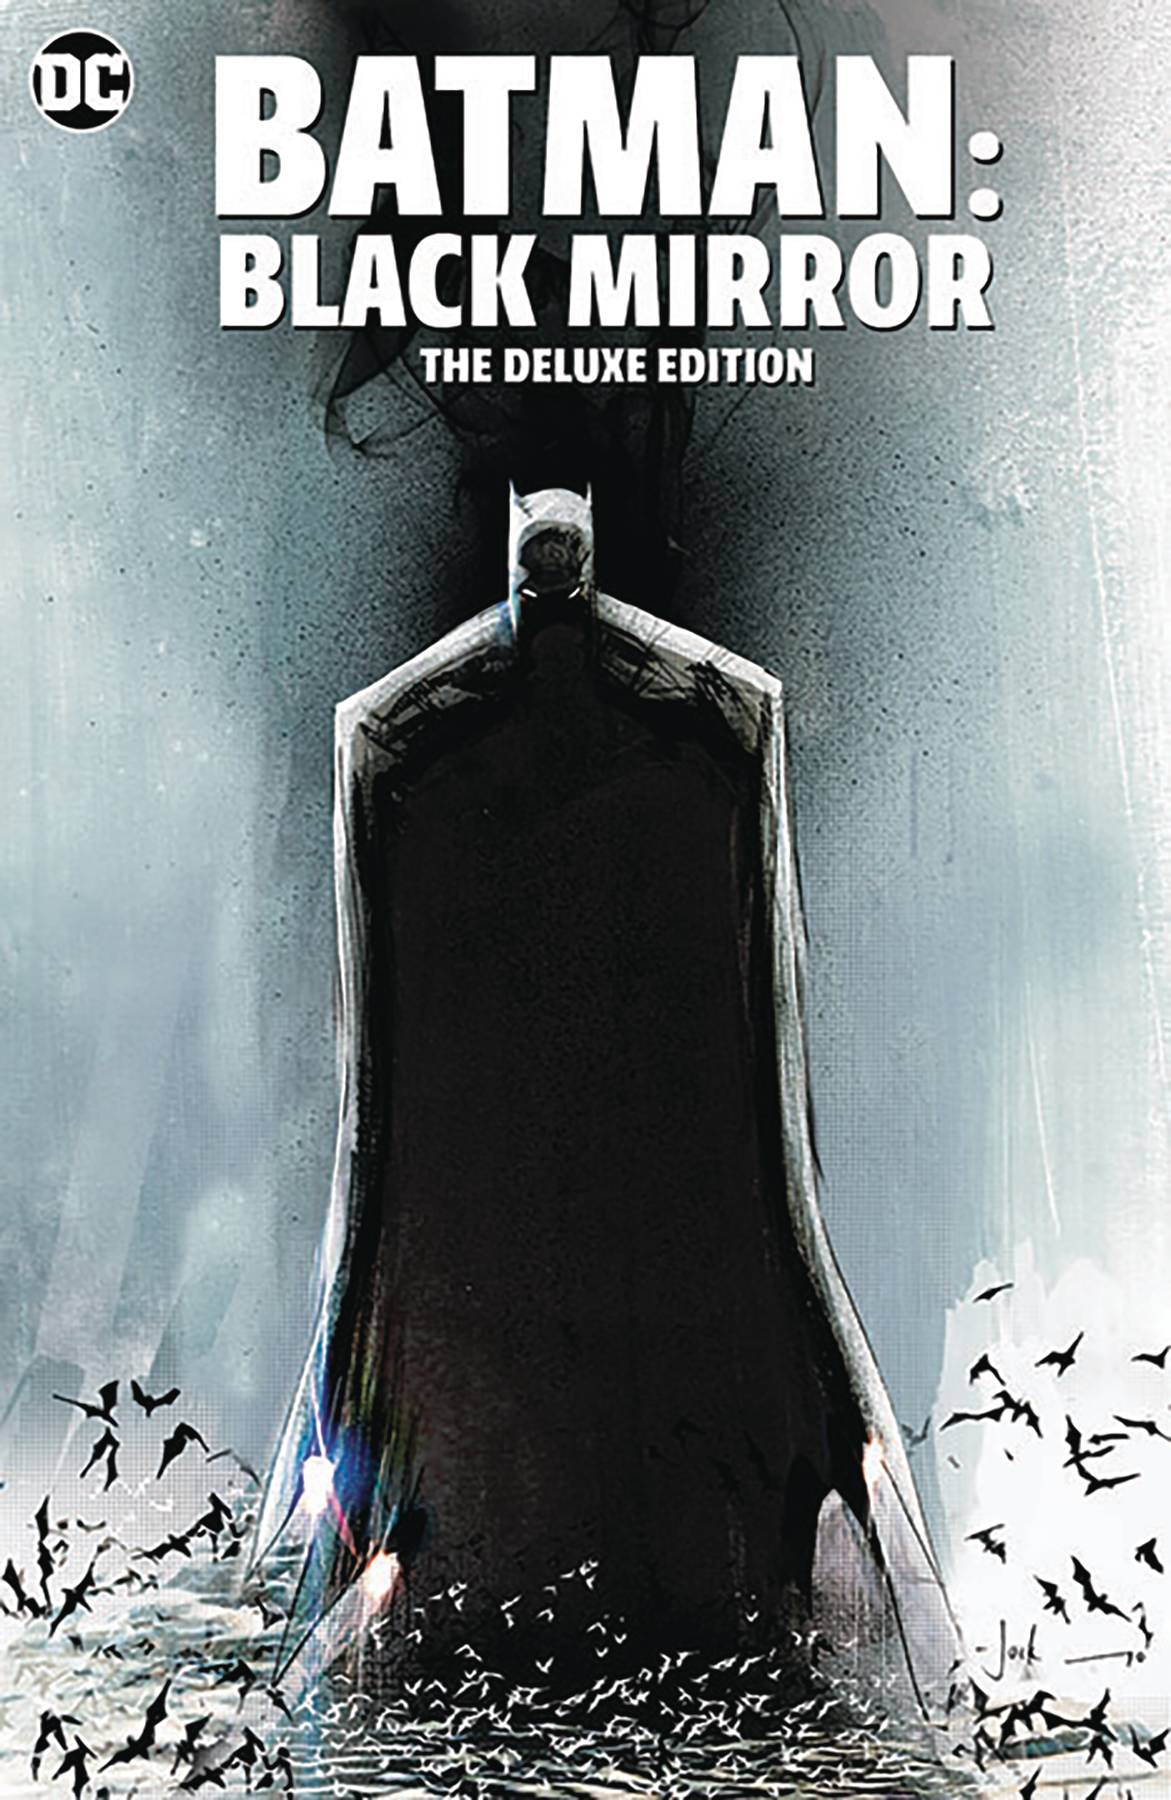 BATMAN THE BLACK MIRROR THE DELUXE EDITION HC MM EDITION - PRE ORDER [FOC 24.02]